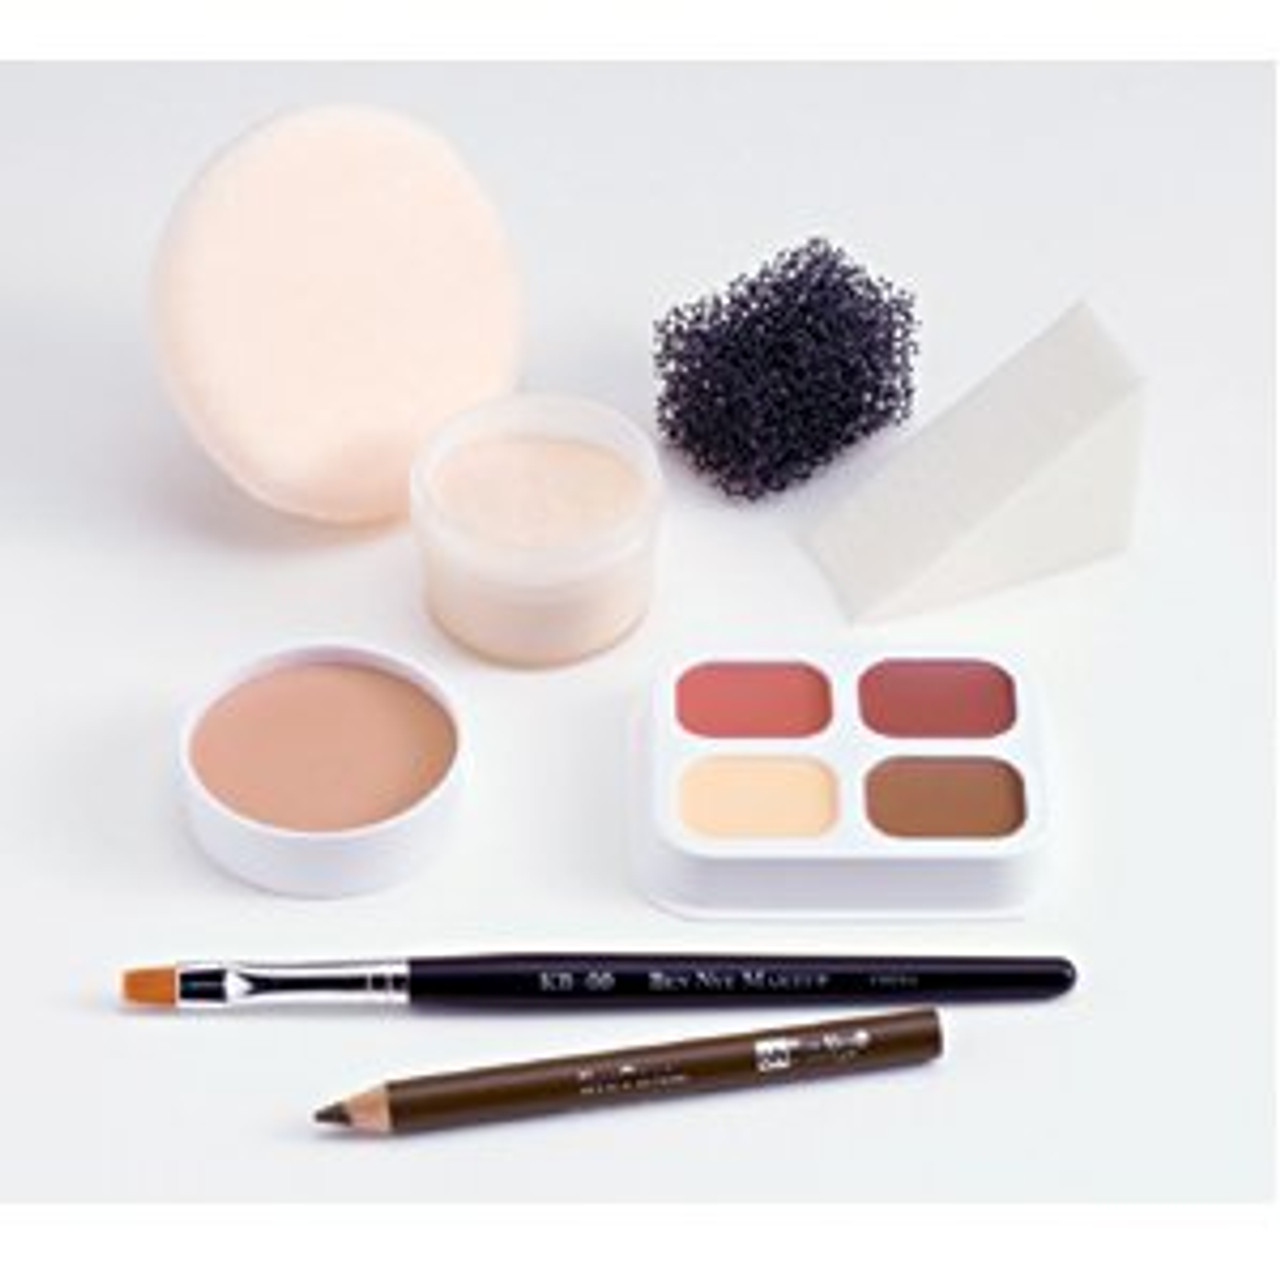 Creme Personal Makeup Kit (Olive-Light/Medium) | Shipping